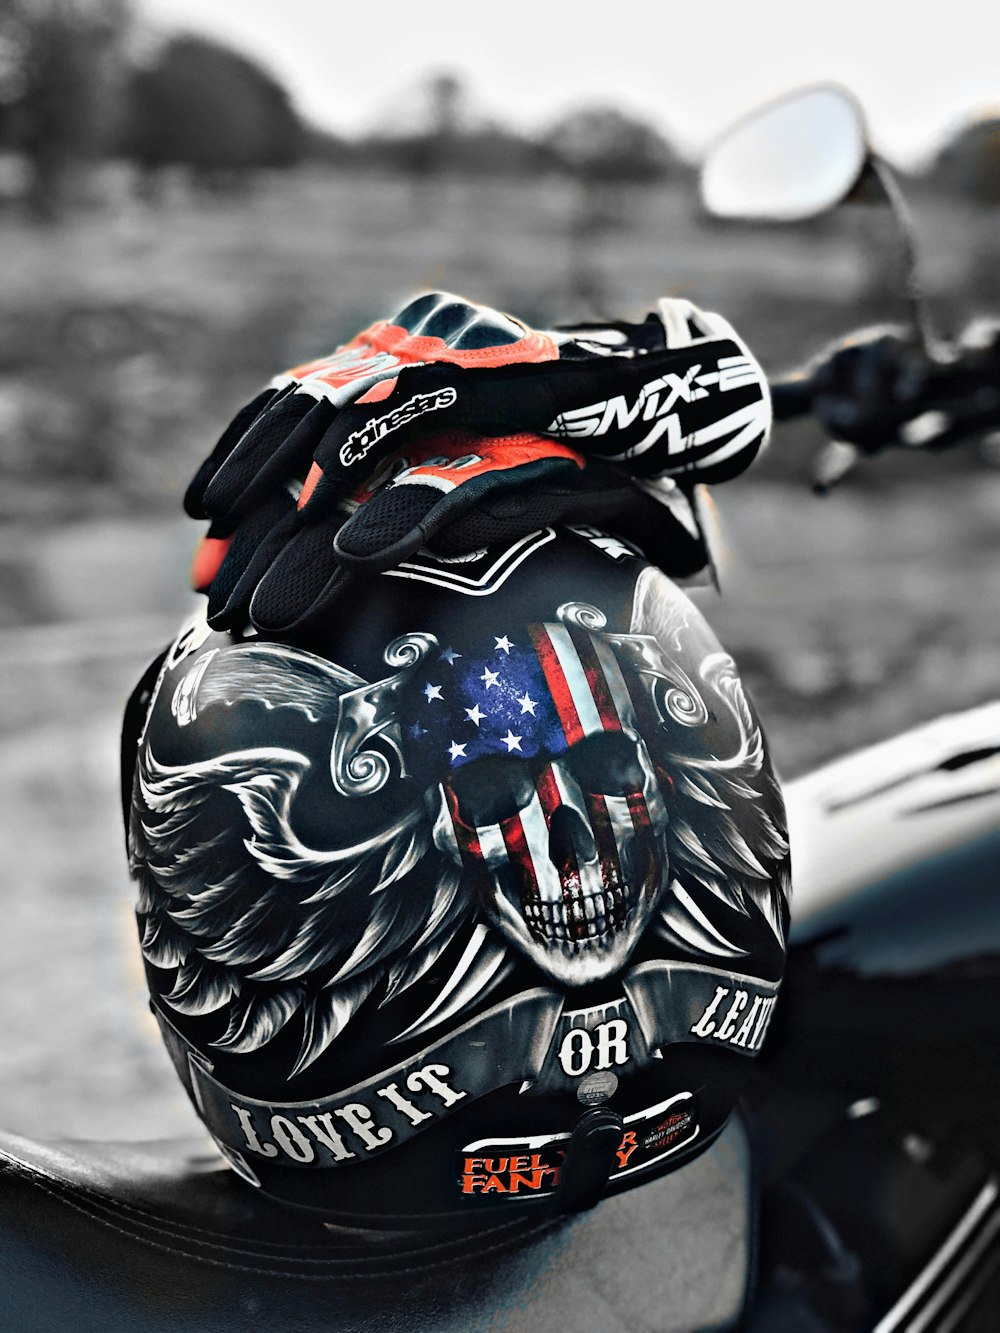 gloves on helmet on motorcycle